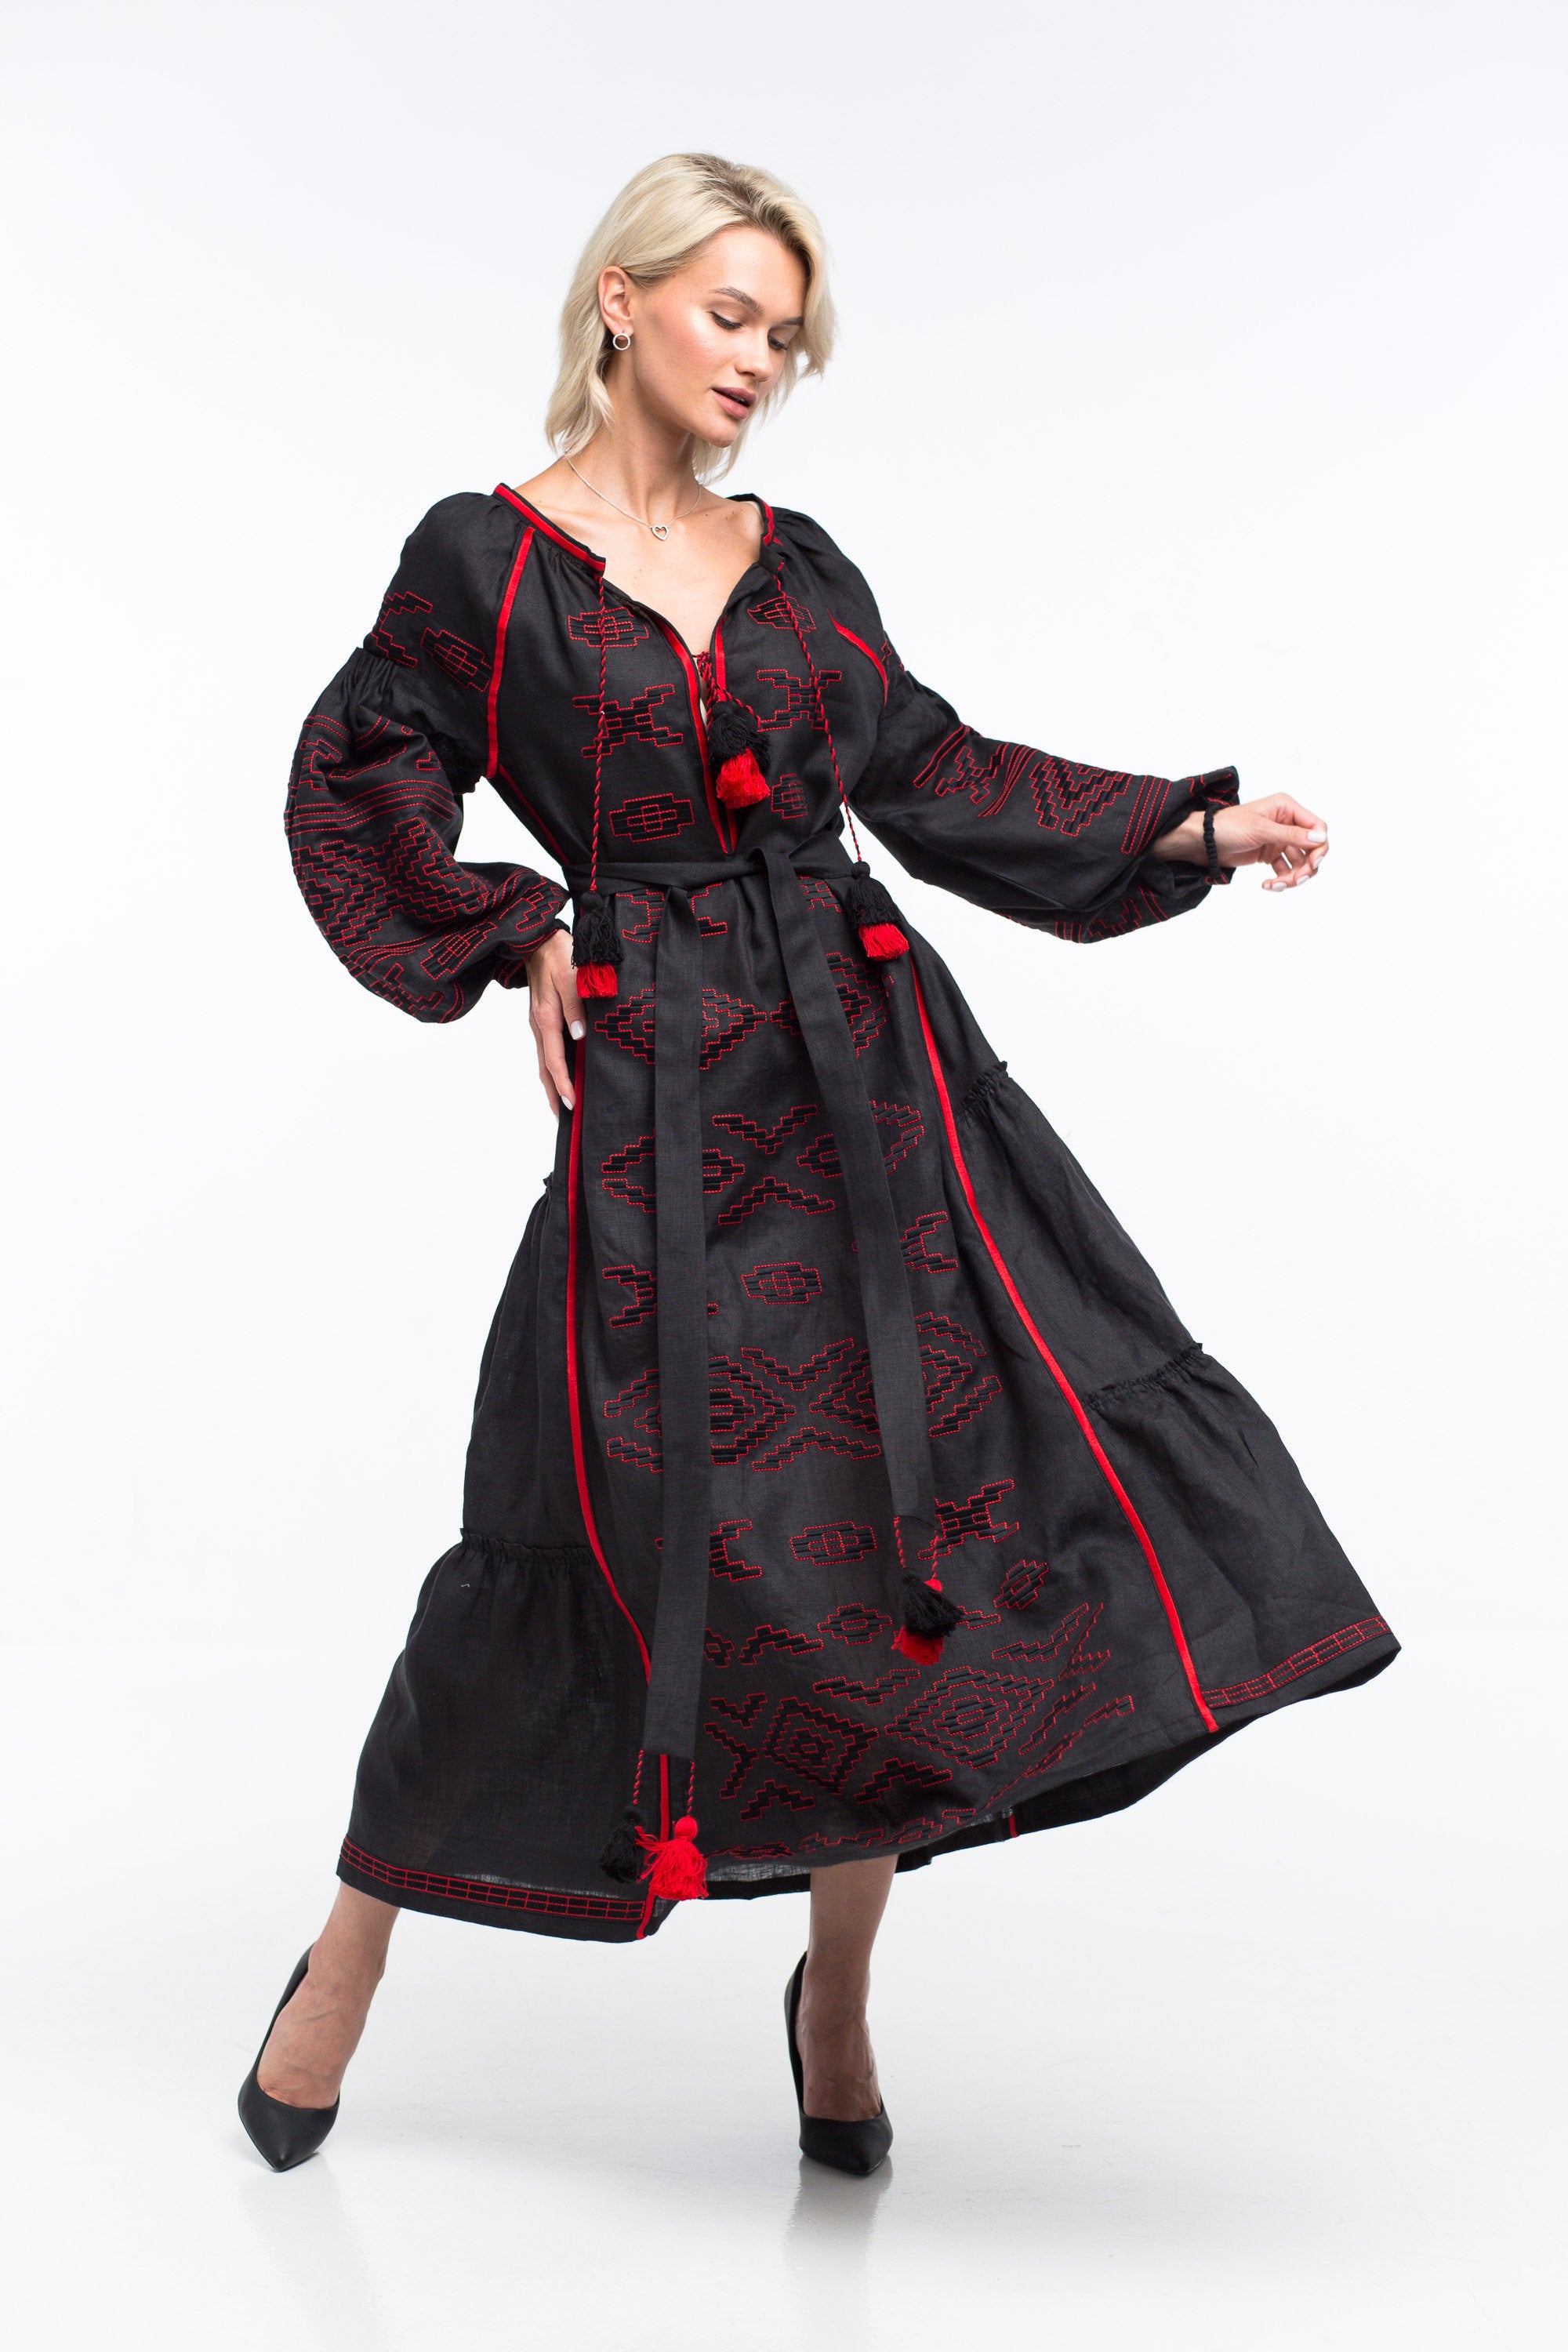 Serena embroidered dress maxi Fashion bohemian wedding clothing with ukrainian ethnic embroidery